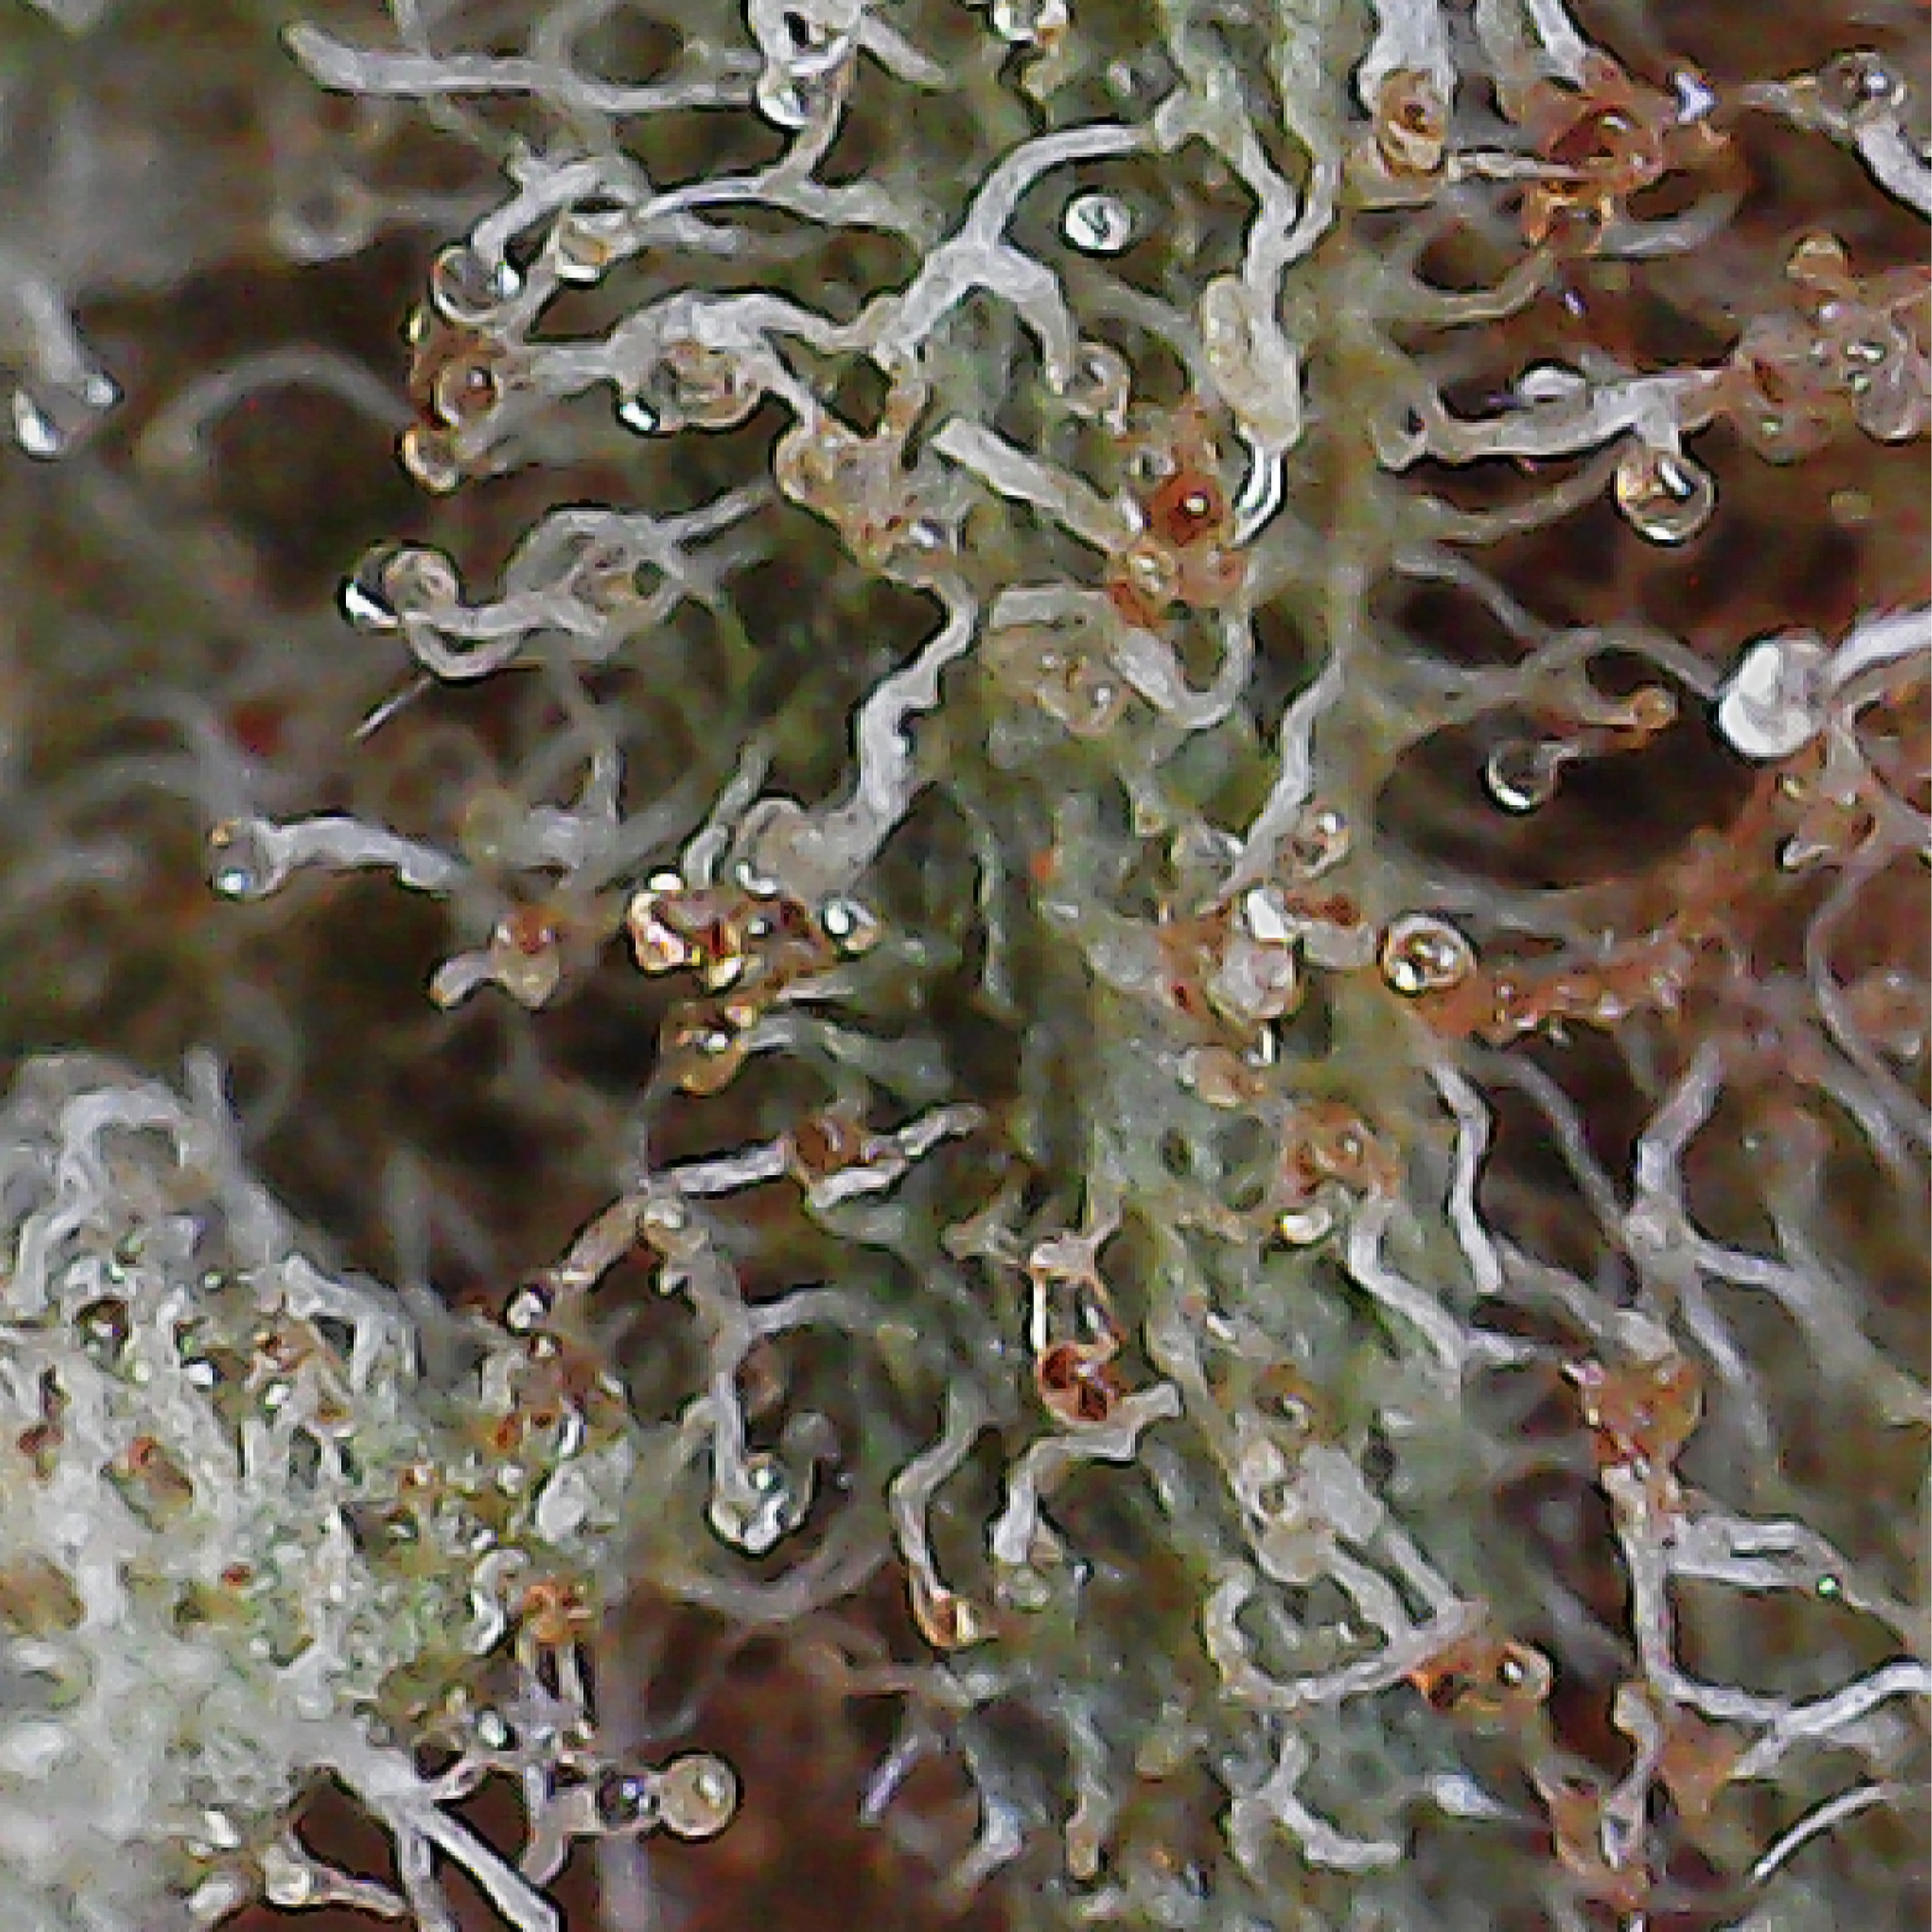 Royal City Cannabis - Orange Hill Special - Up Close Photo